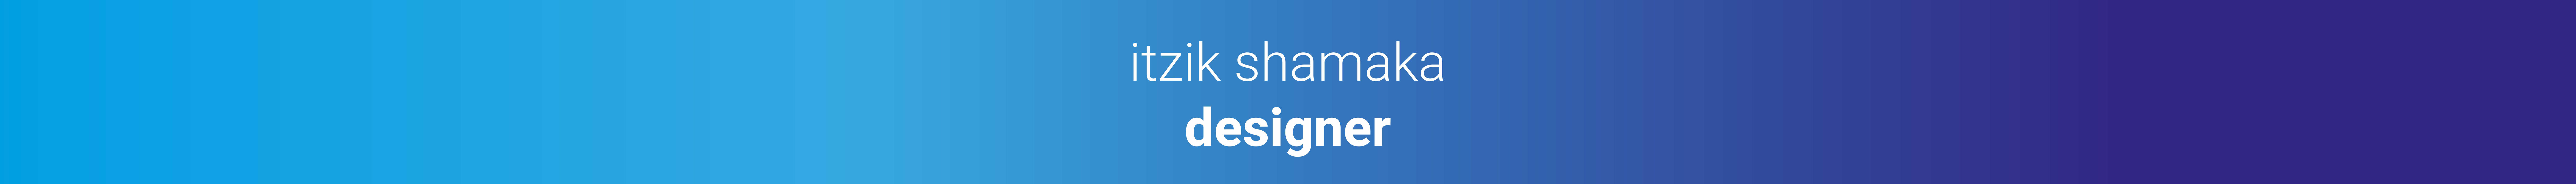 itzik shamaka's profile banner